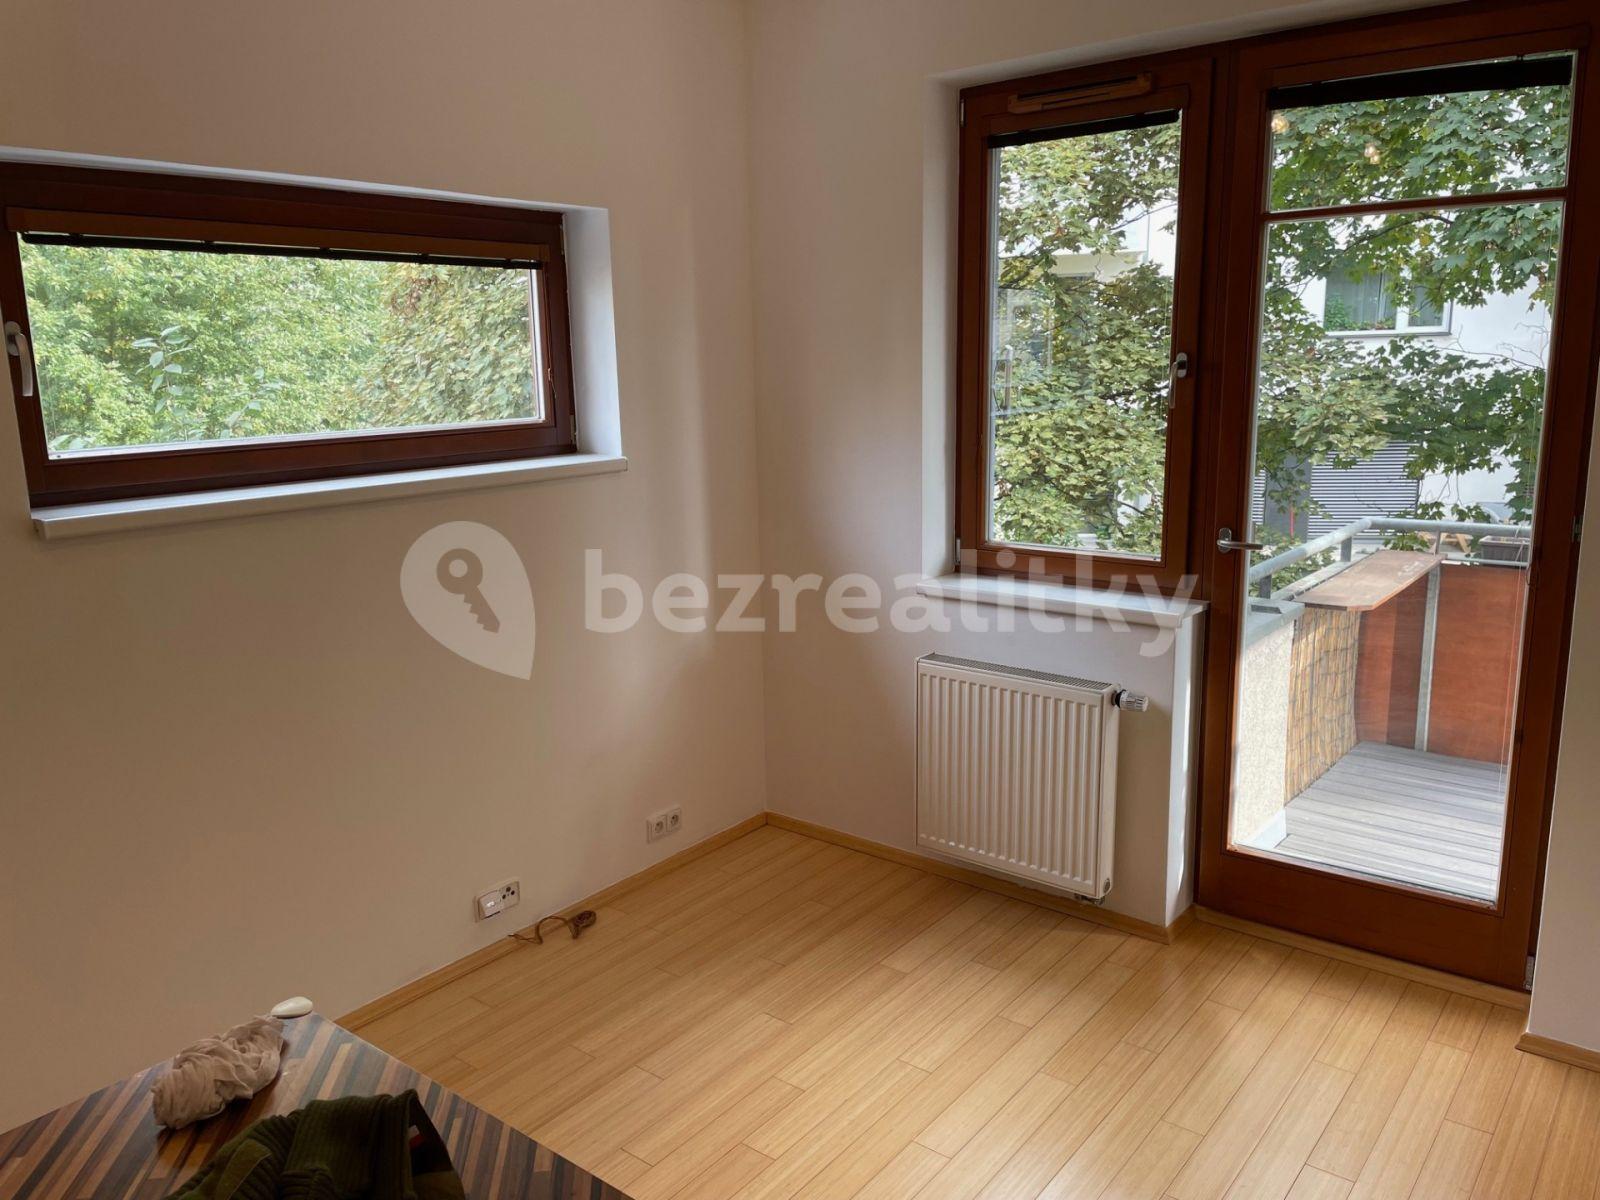 1 bedroom with open-plan kitchen flat for sale, 45 m², Vladycká, Prague, Prague